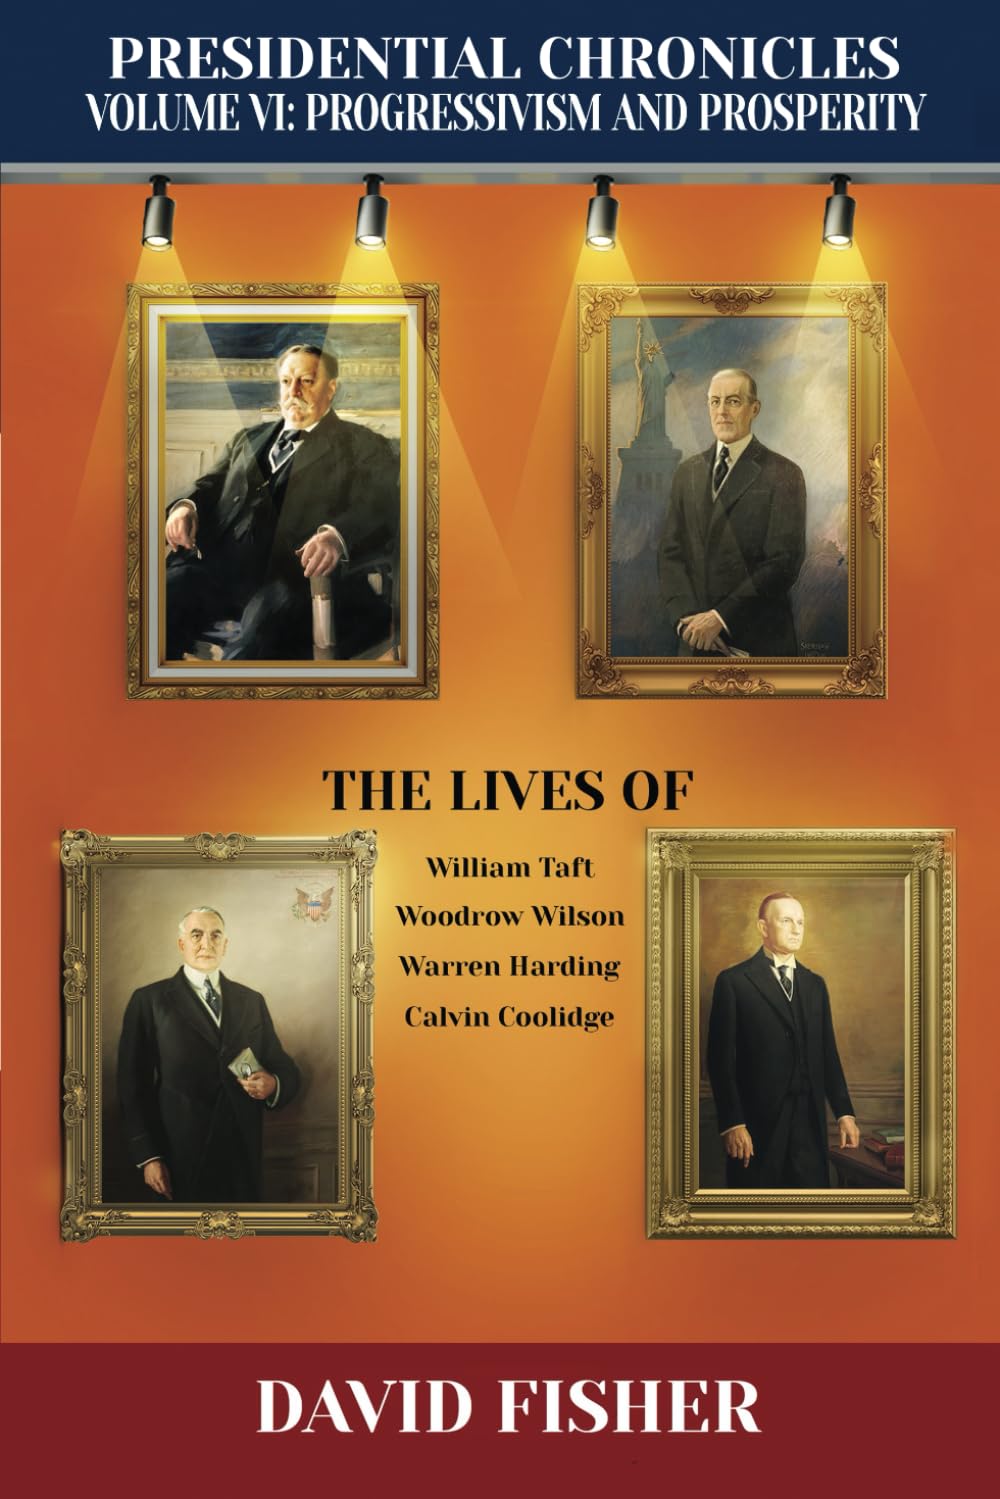 Presidential Chronicles Volume VI: Progressivism and Prosperity: The Lives of William Taft, Woodrow Wilson, Warren Harding, and Calvin Coolidge (Presidential Chronicles - Volumes)